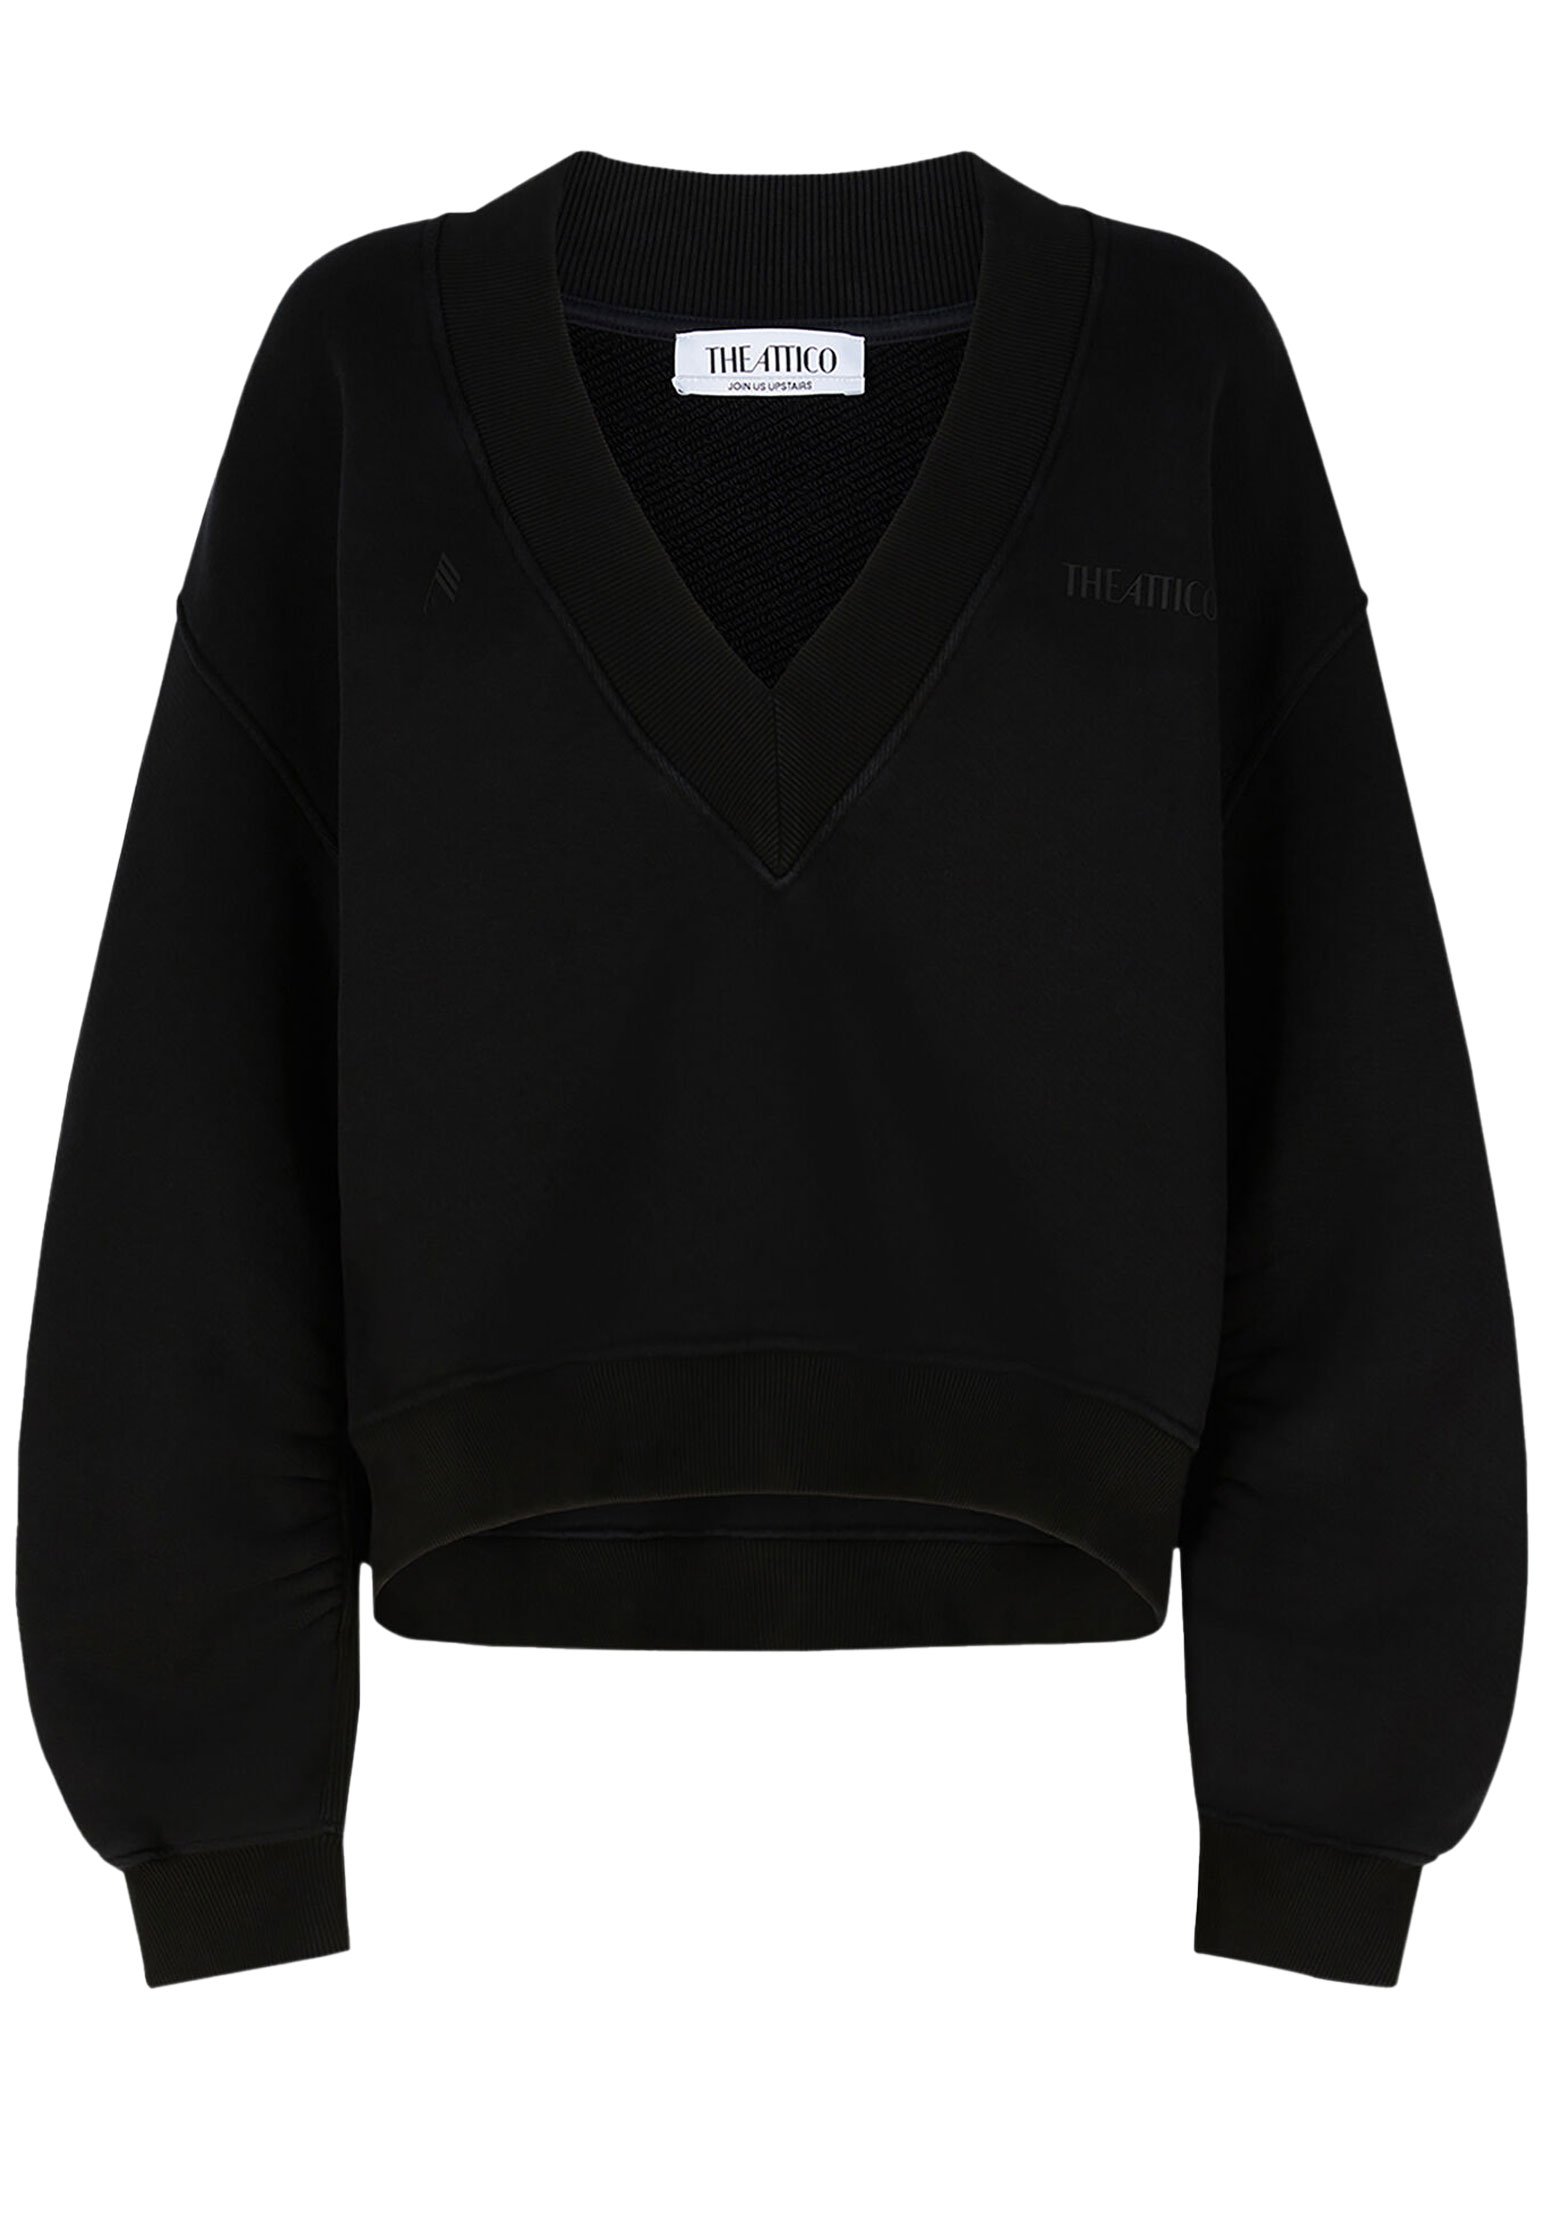 Sweatshirt THE ATTICO Color: black (Code: 3435) in online store Allure